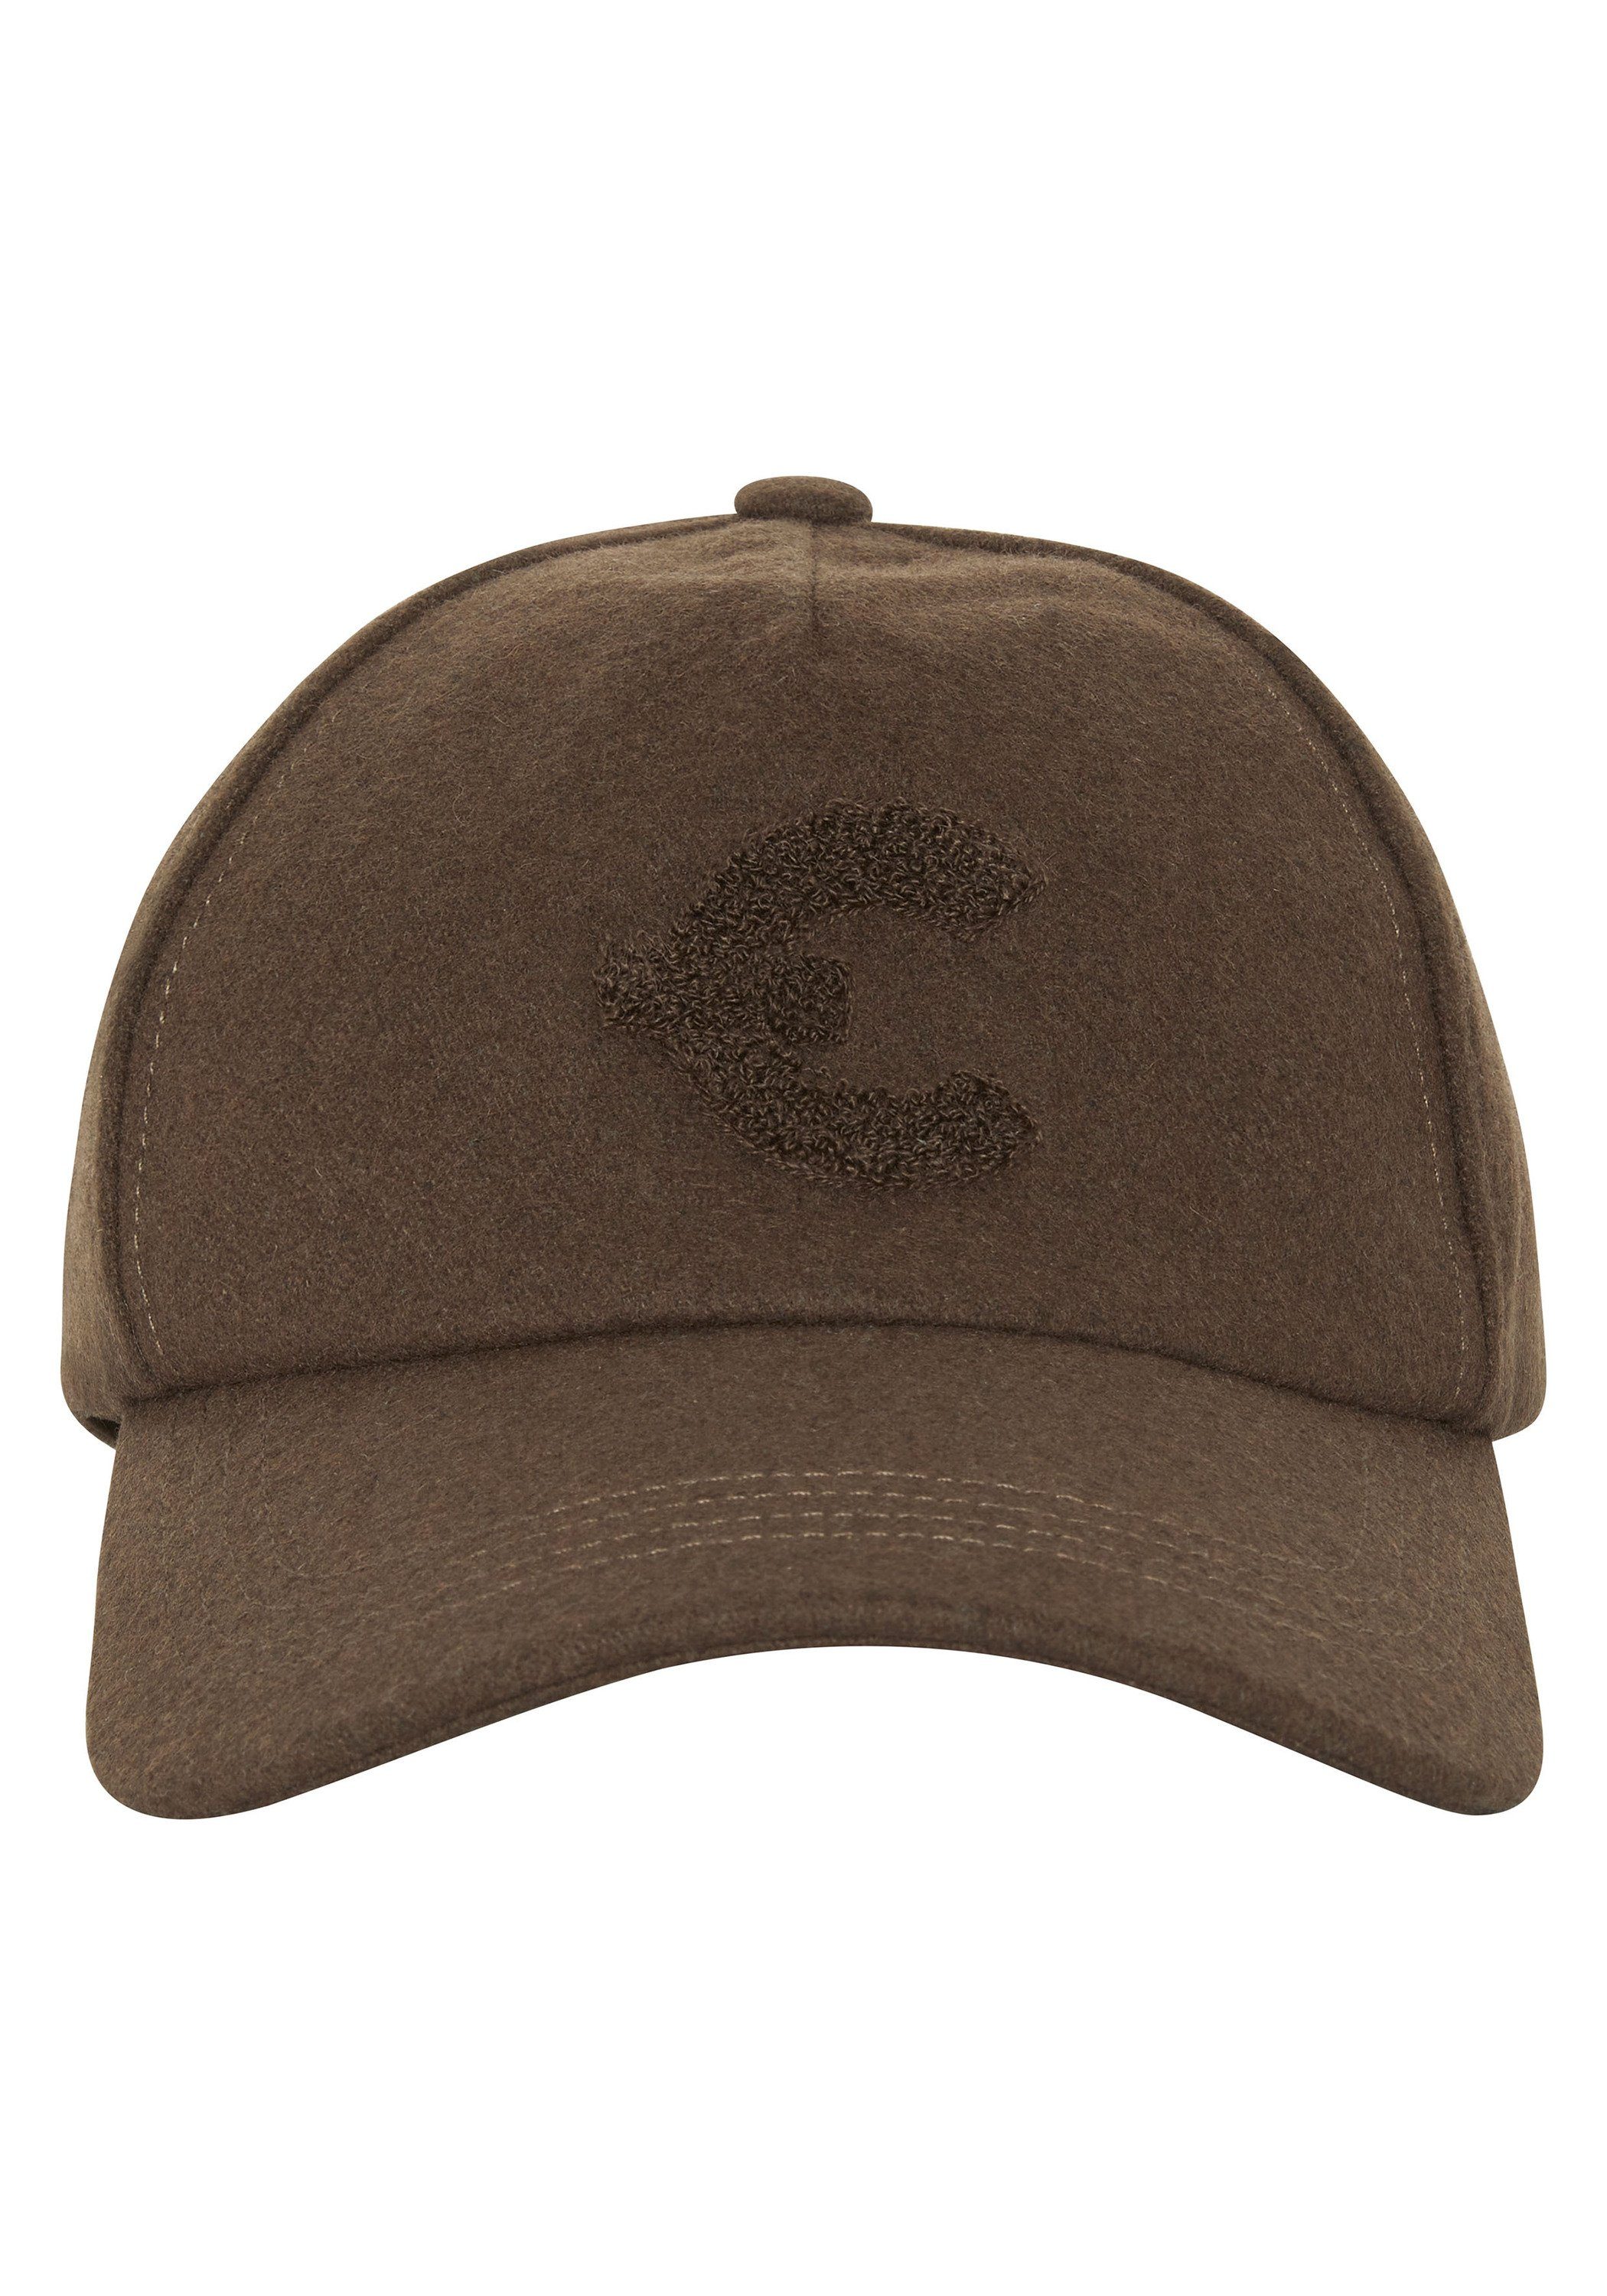 19-1215 Logo-C-Applikation Cap mit Chocolate 1 Snapback Basecap Chiemsee Shaved